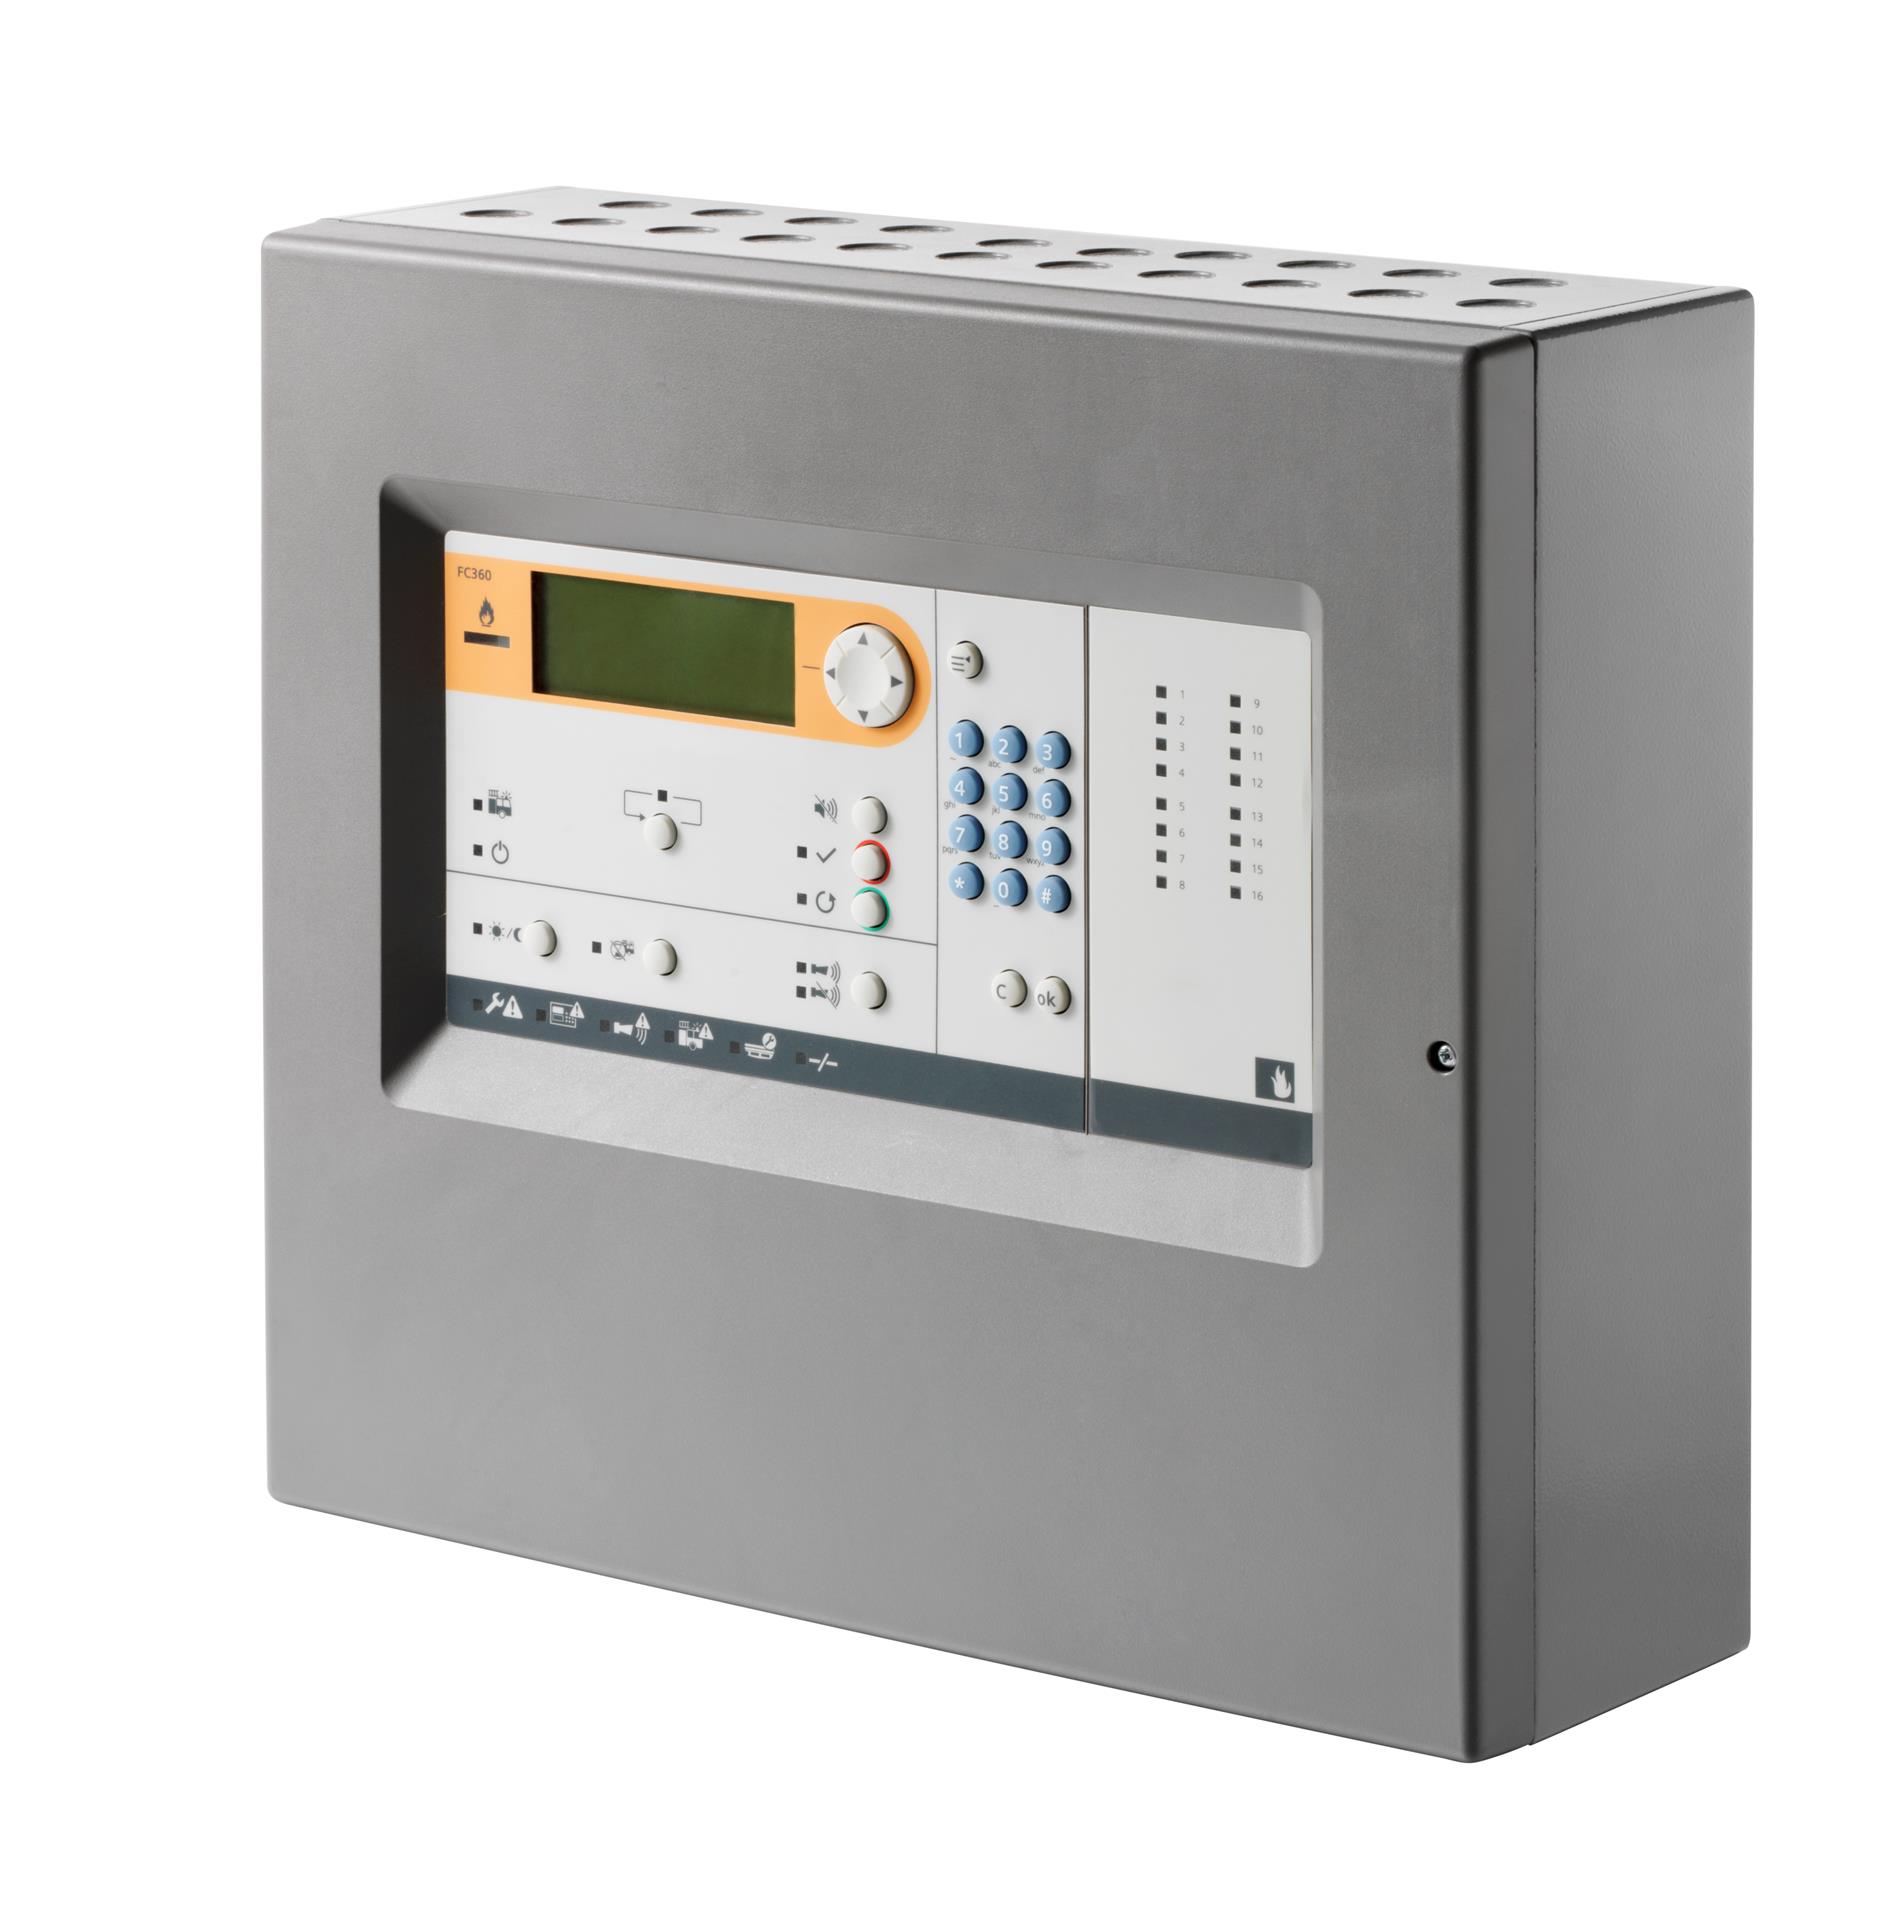 SIEMENS FC361-YZ Cerberus FIT İnteraktif Yangın Algılama ve Alarm Kontrol Paneli – Kompakt Kasa ve LED Indicator (1 loop, 126 adres)